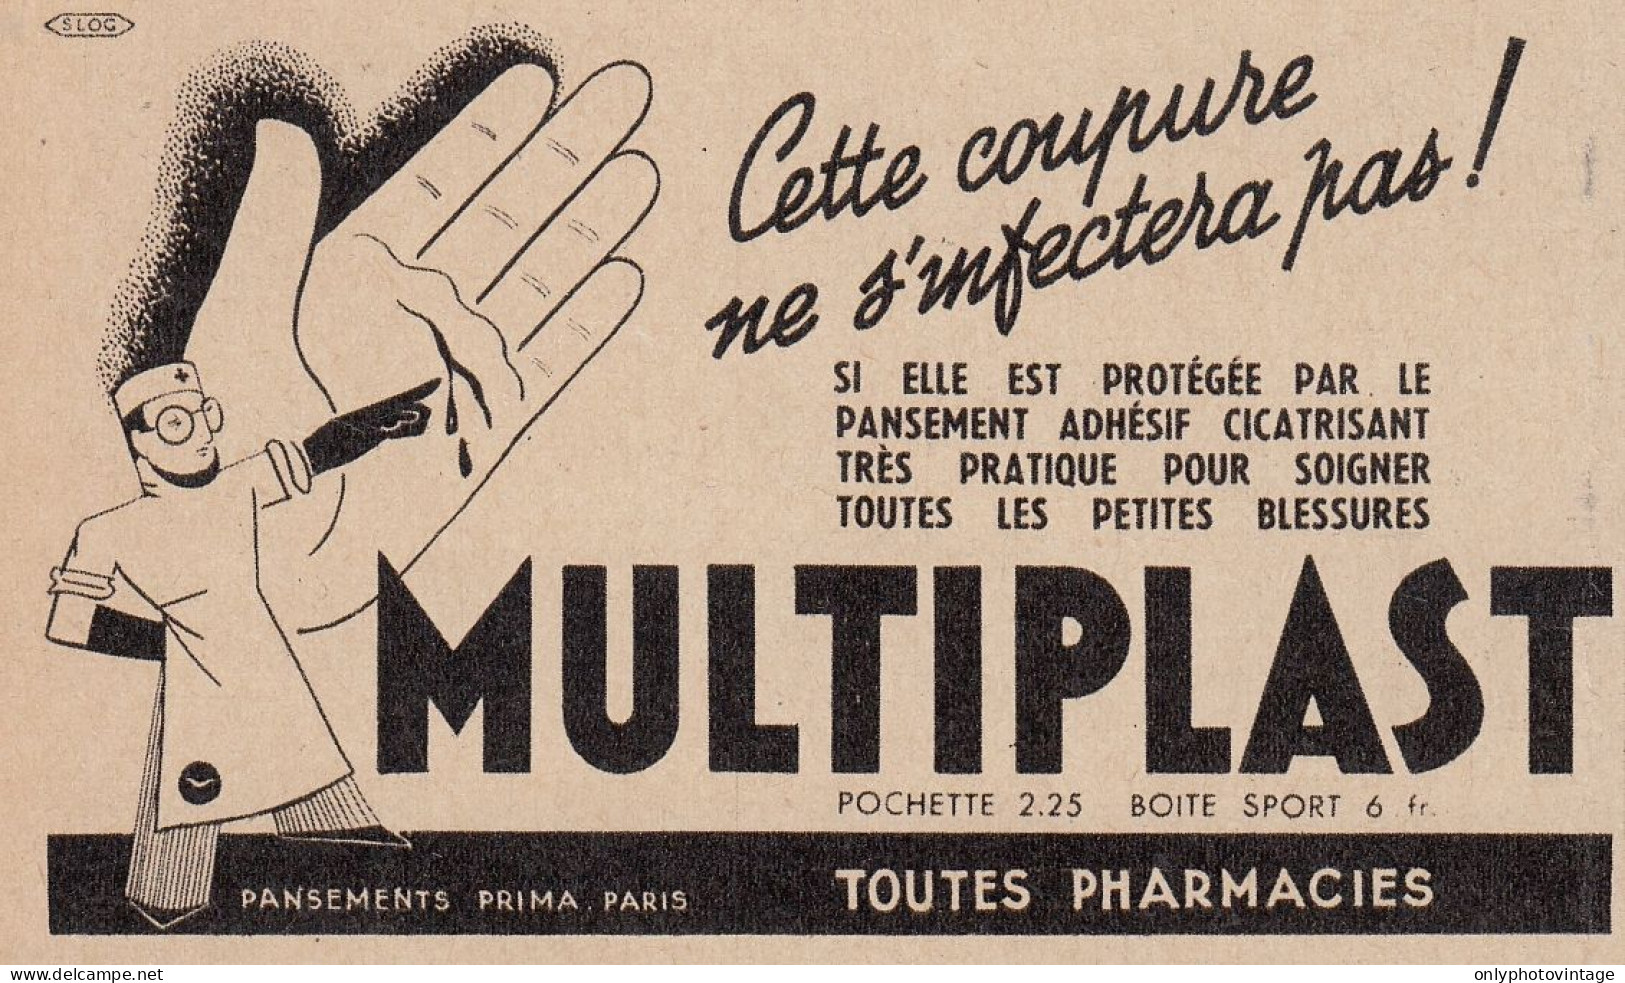 MULTIPLAST - 1938 Vintage Advertising - Pubblicit� Epoca - Publicidad